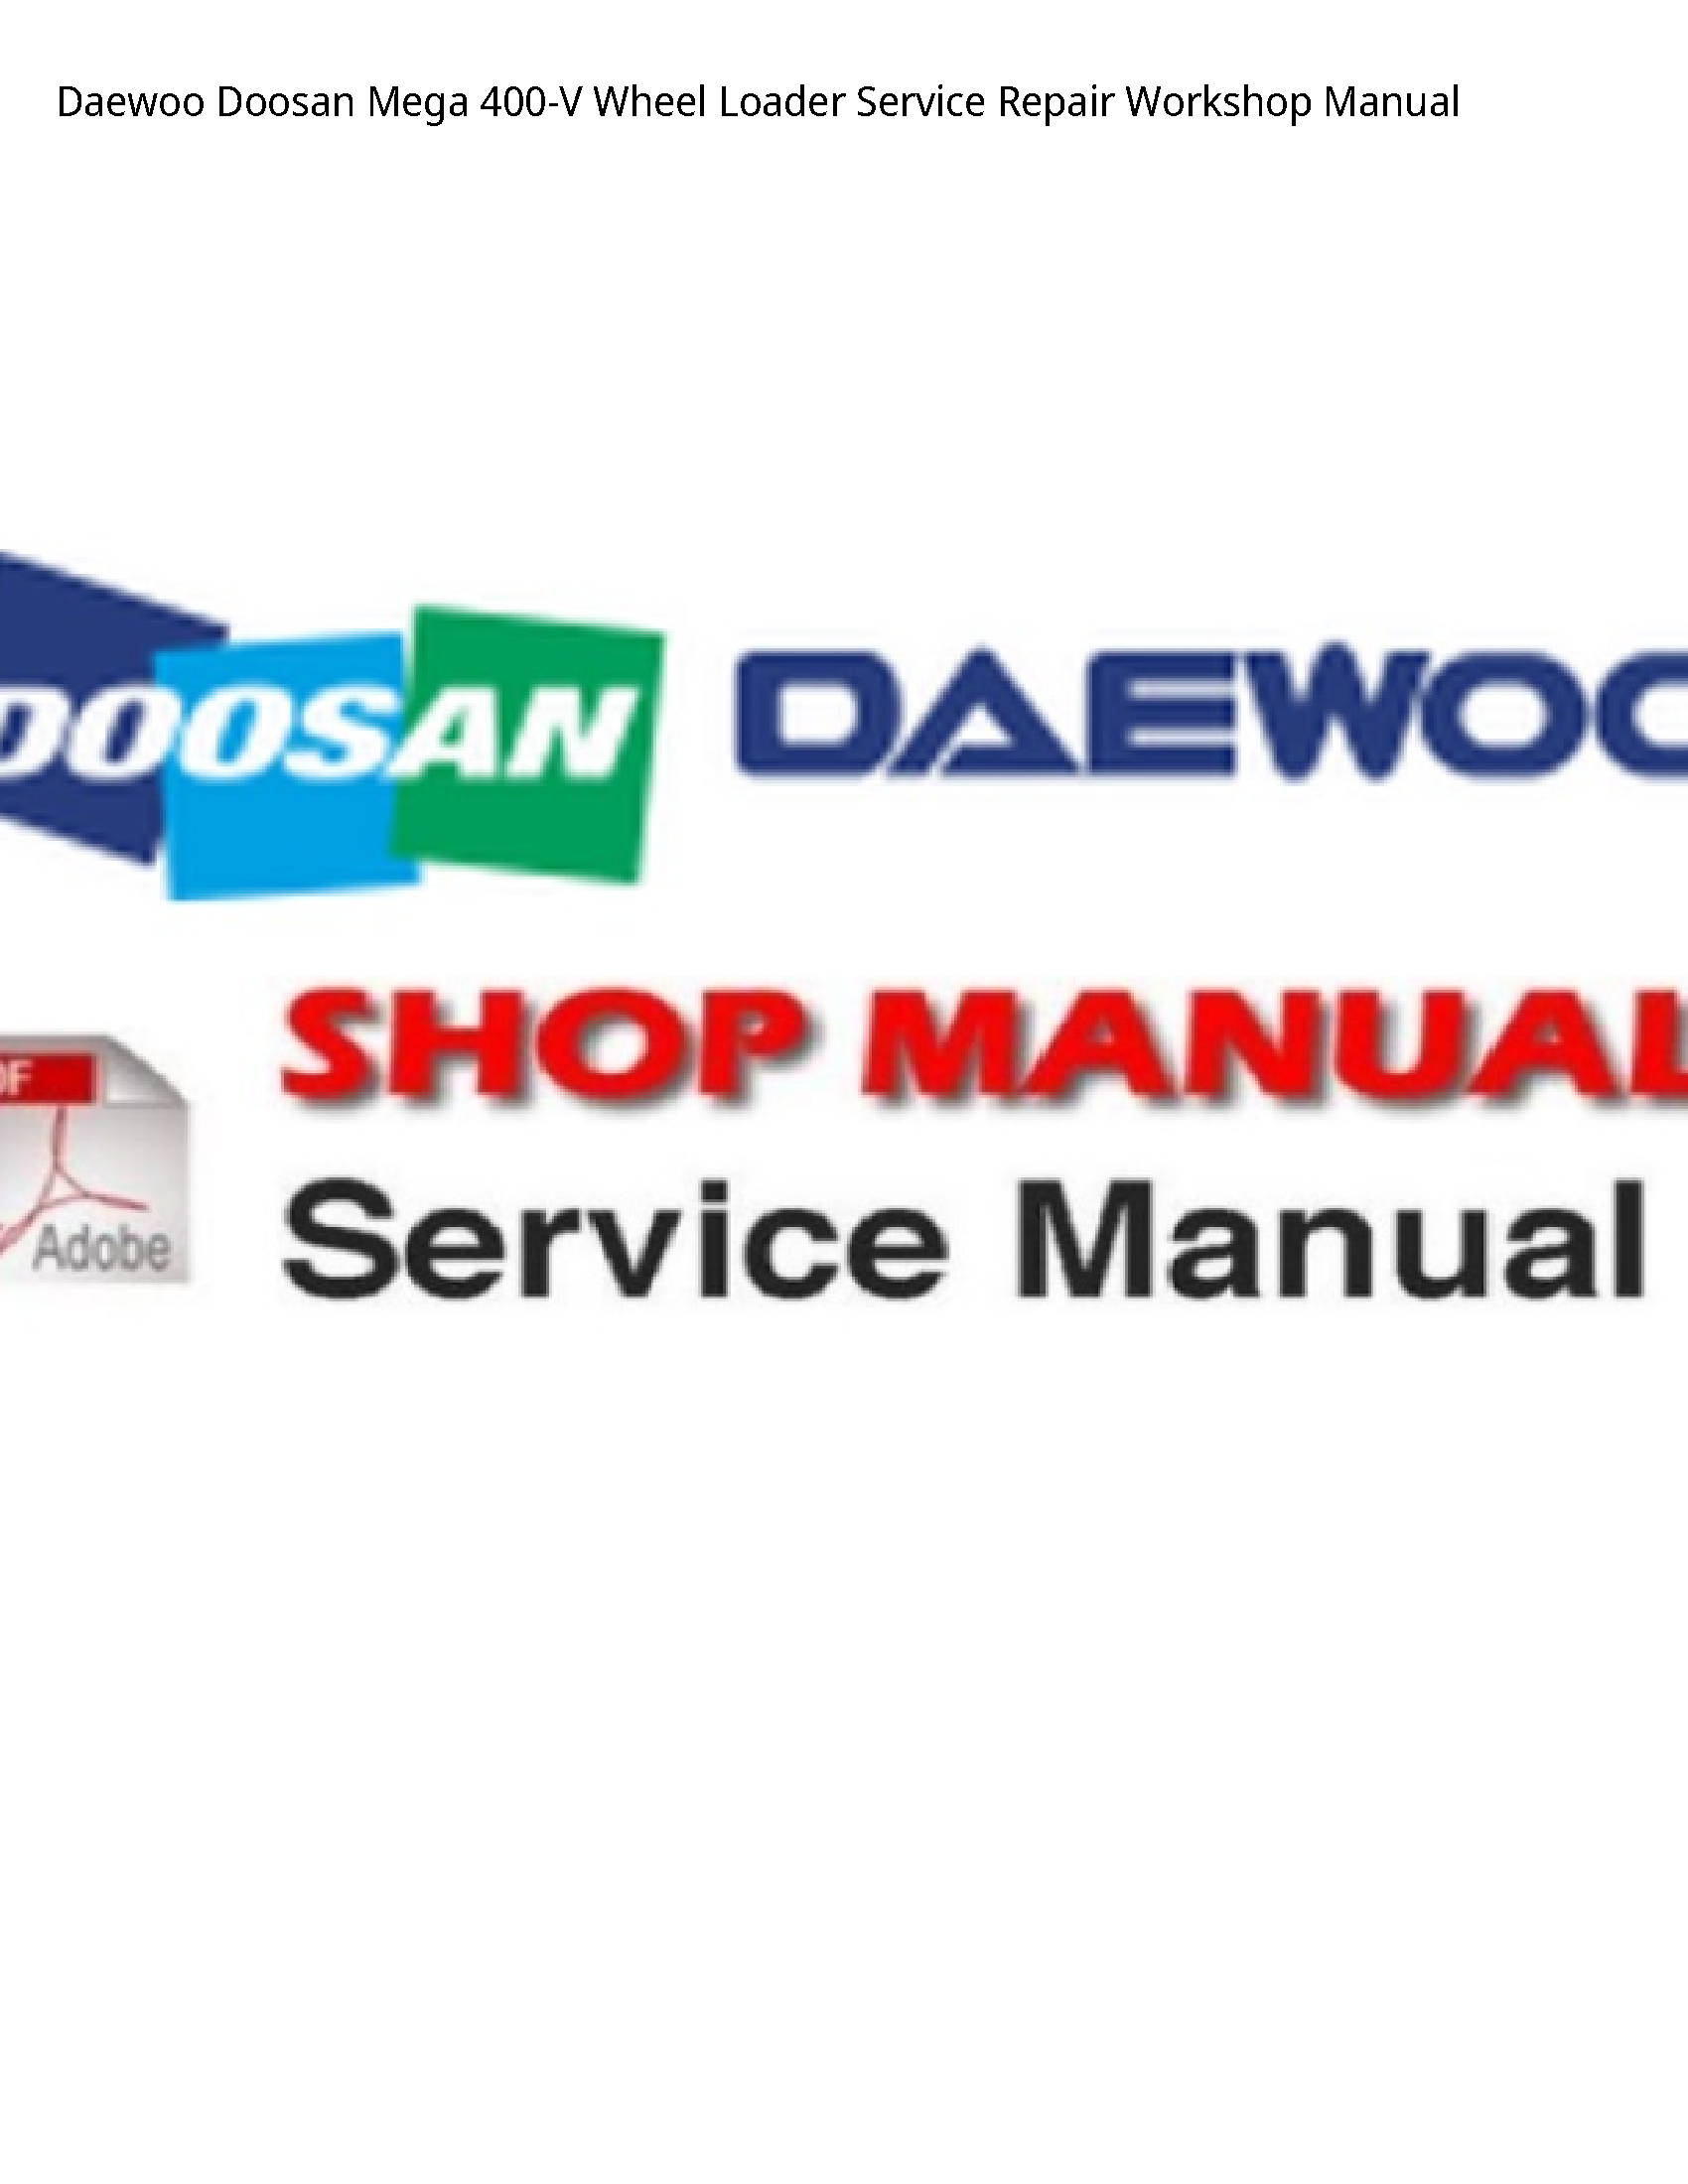 Daewoo Doosan 400-V Mega Wheel Loader manual